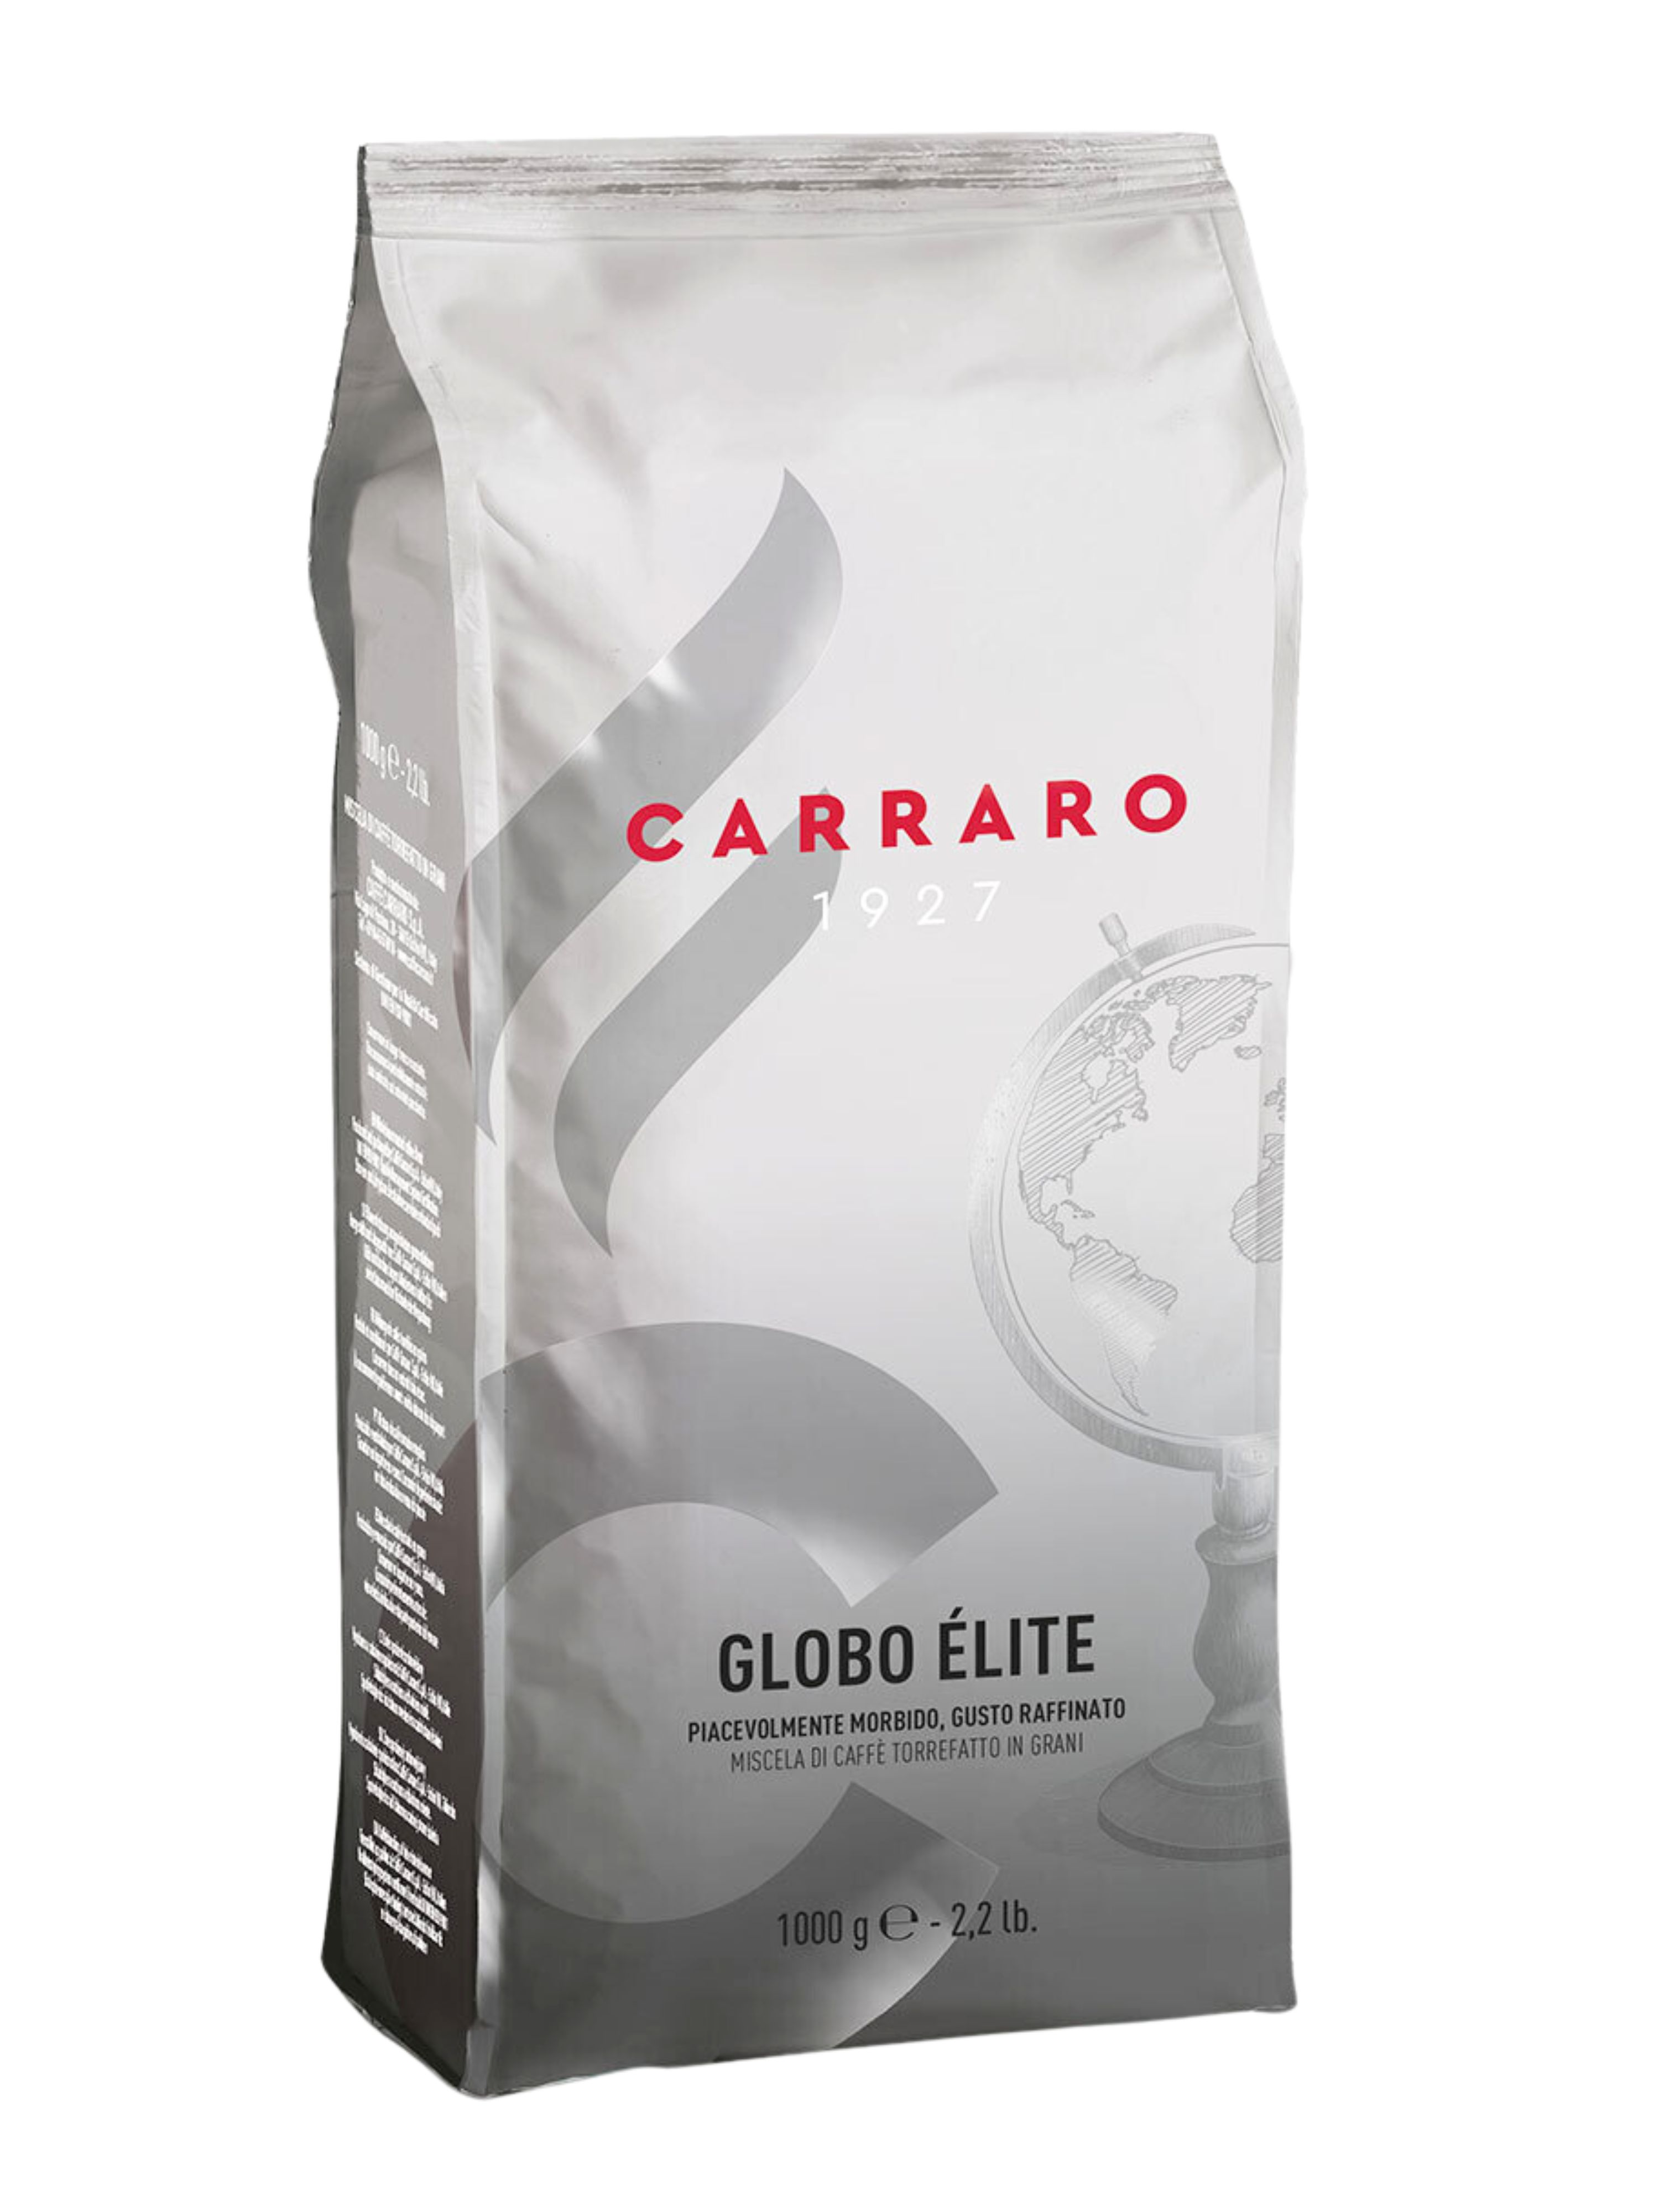 Зерновой кофе CARRARO GLOBO ELITE, пакет, 1000гр.